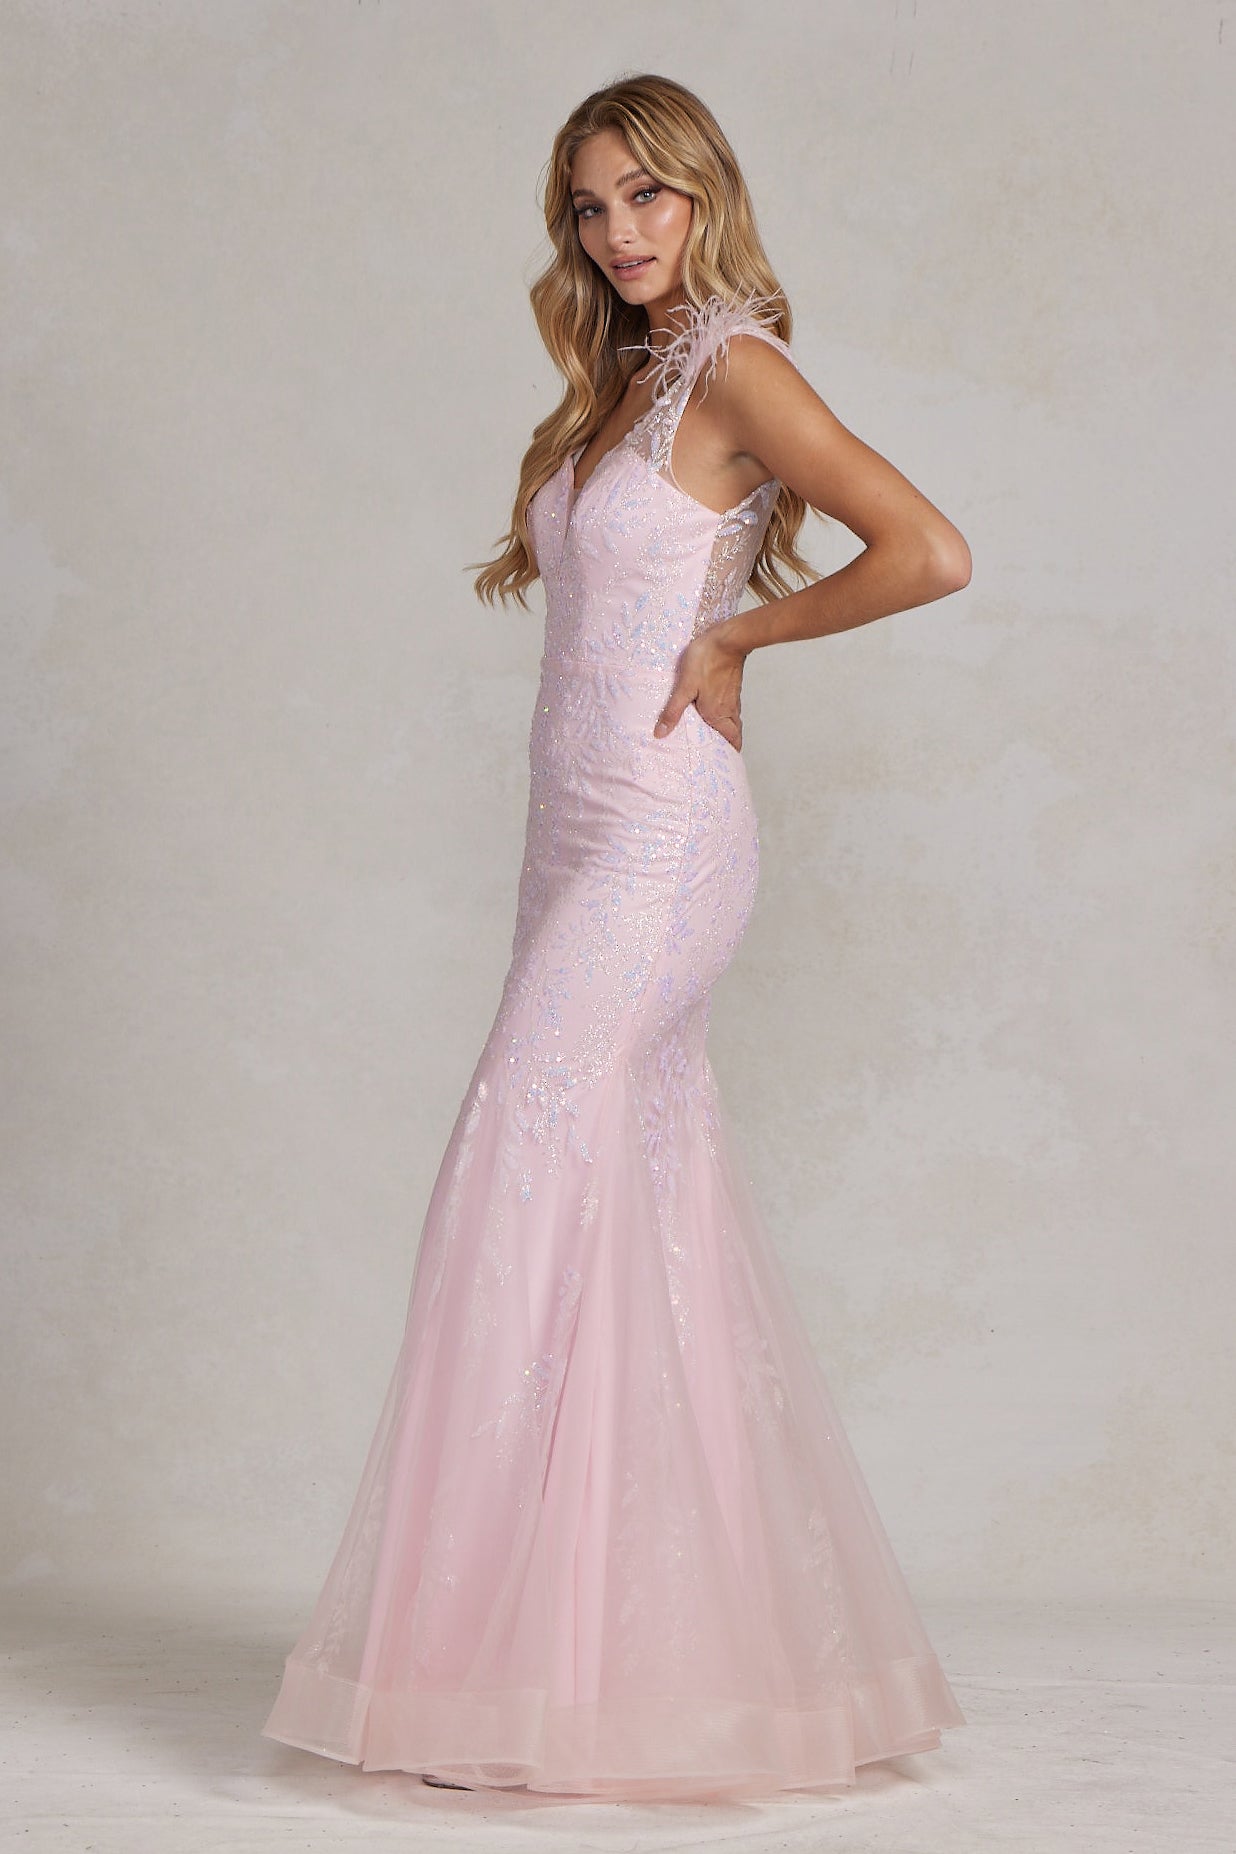 Illusion Sweetheart Straps Mermaid Feather Embellished Long Prom Dress NXT1208-Prom Dress-smcfashion.com